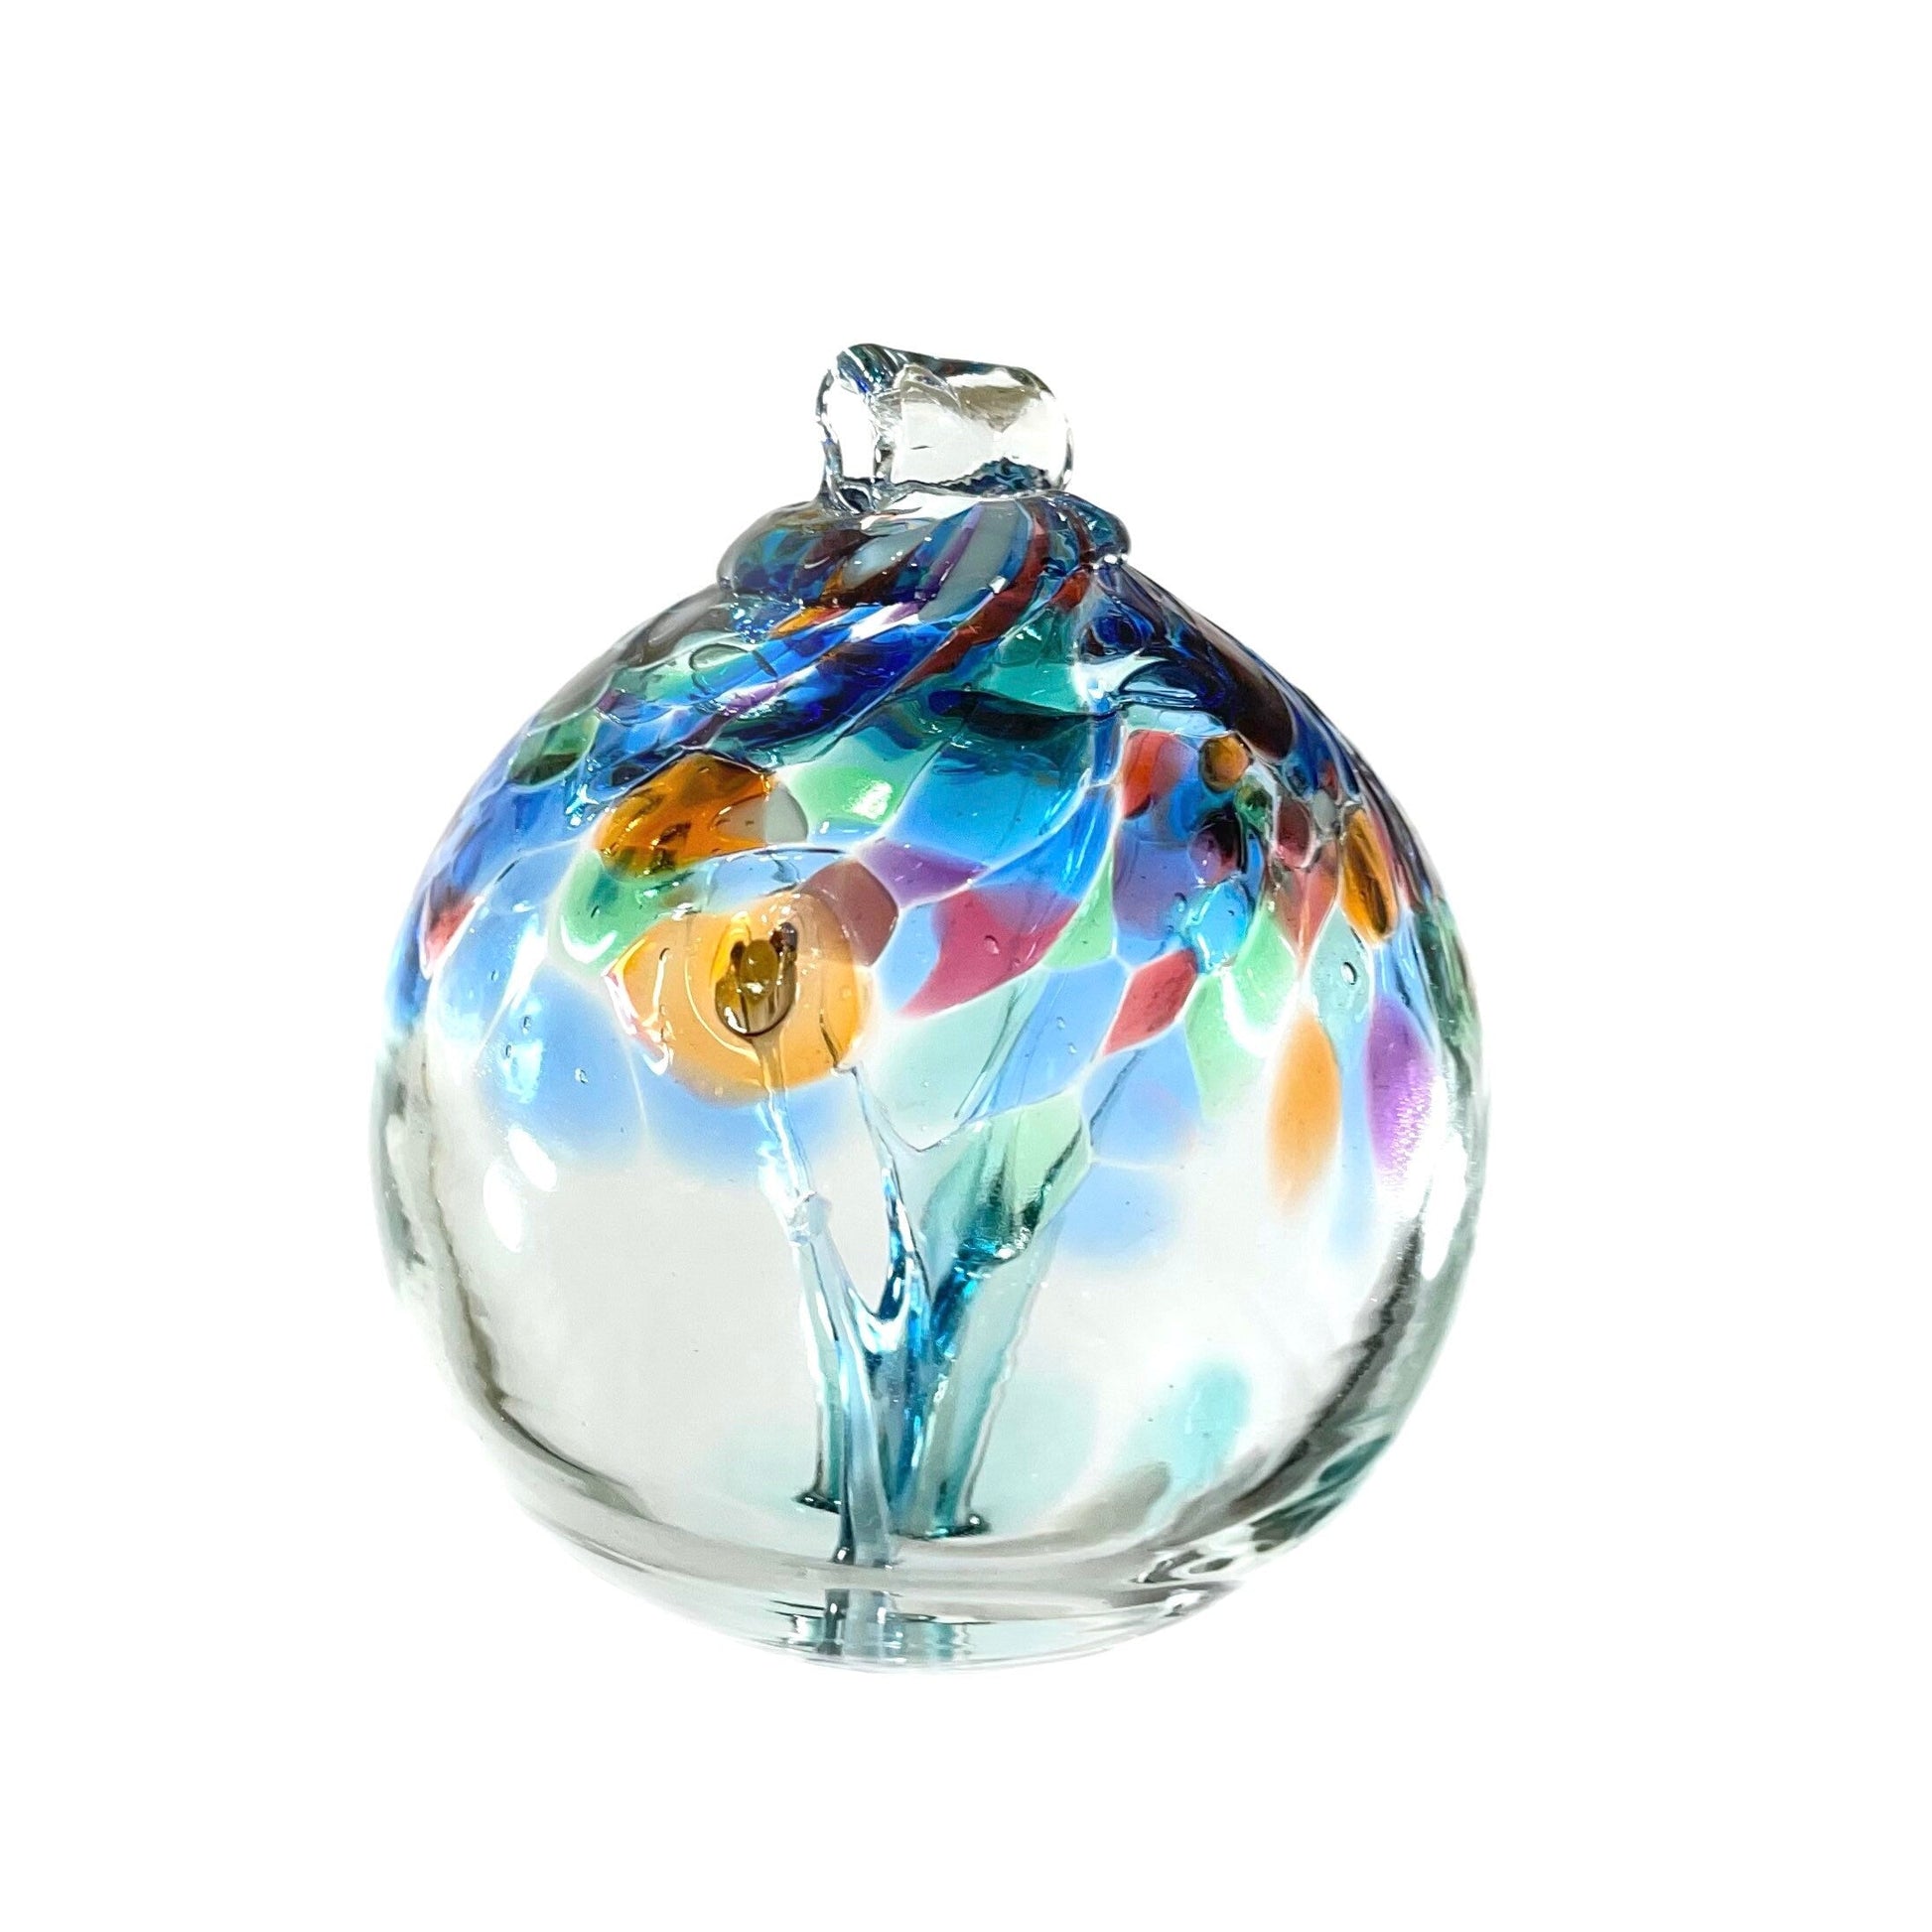 Handmade Glass Art 2” Globe Ornament - Tree of Caring